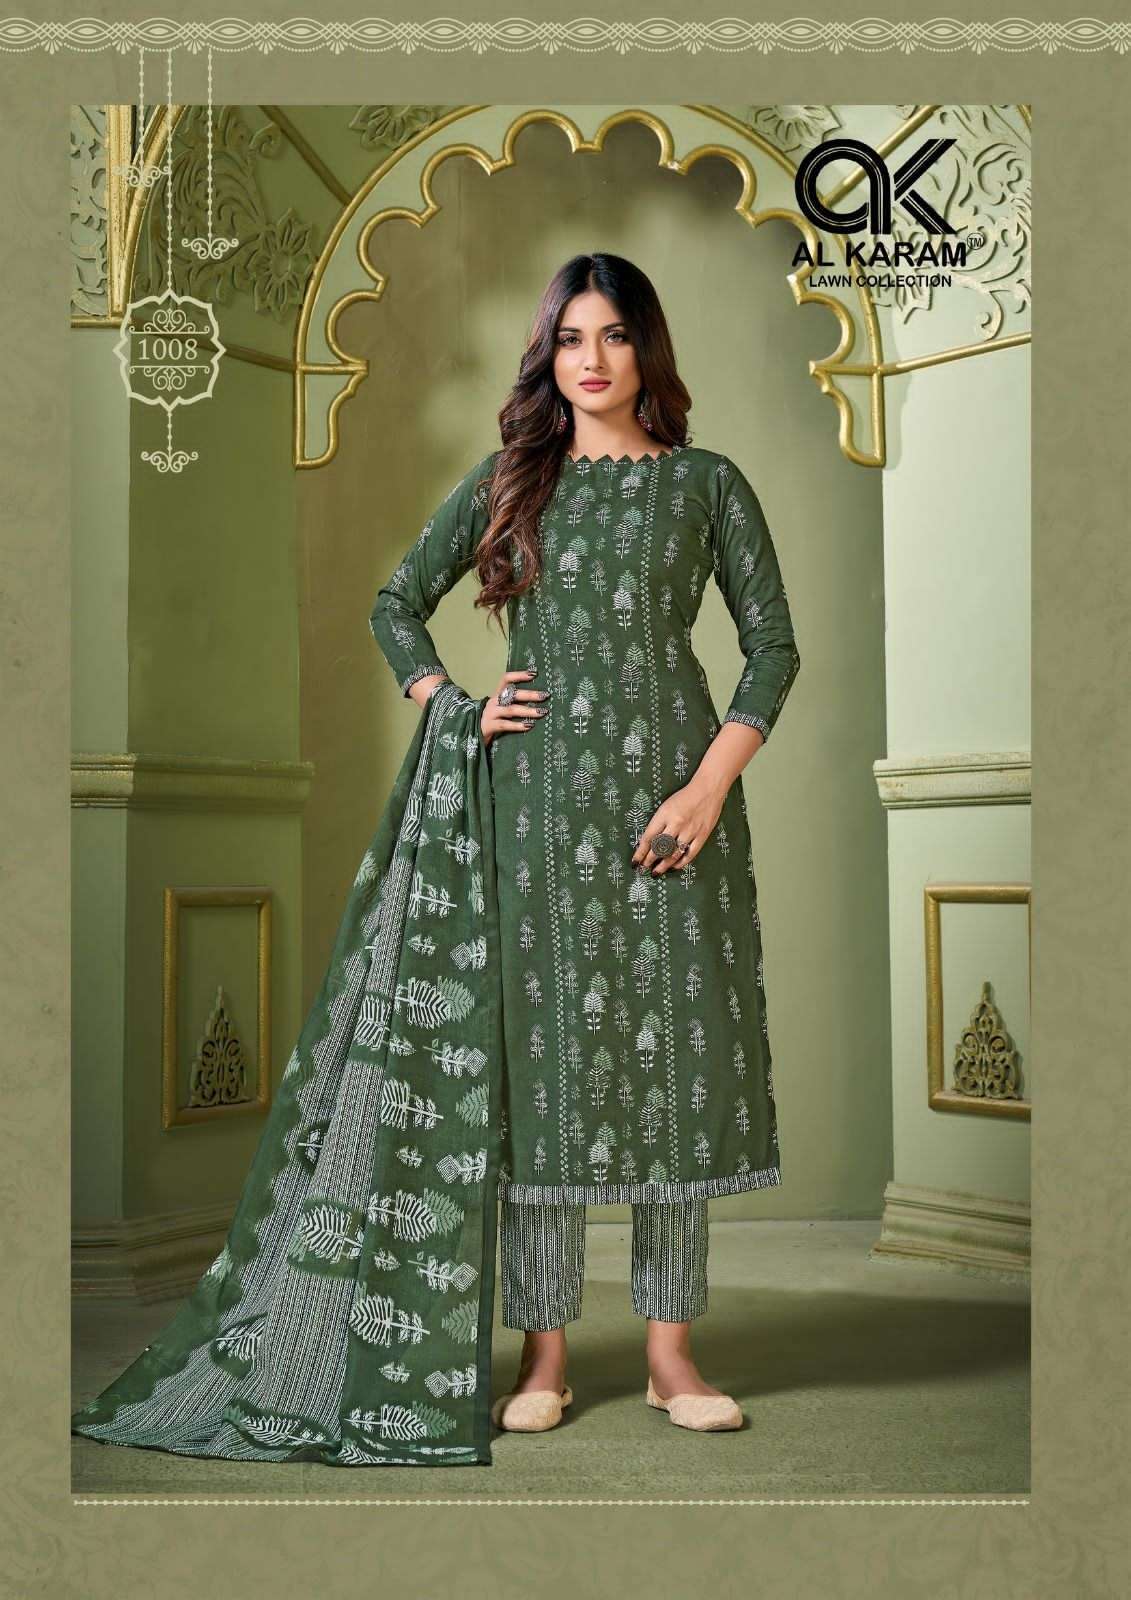 al karam by charizma lawn cotton designer salwar kameez online shopping surat 